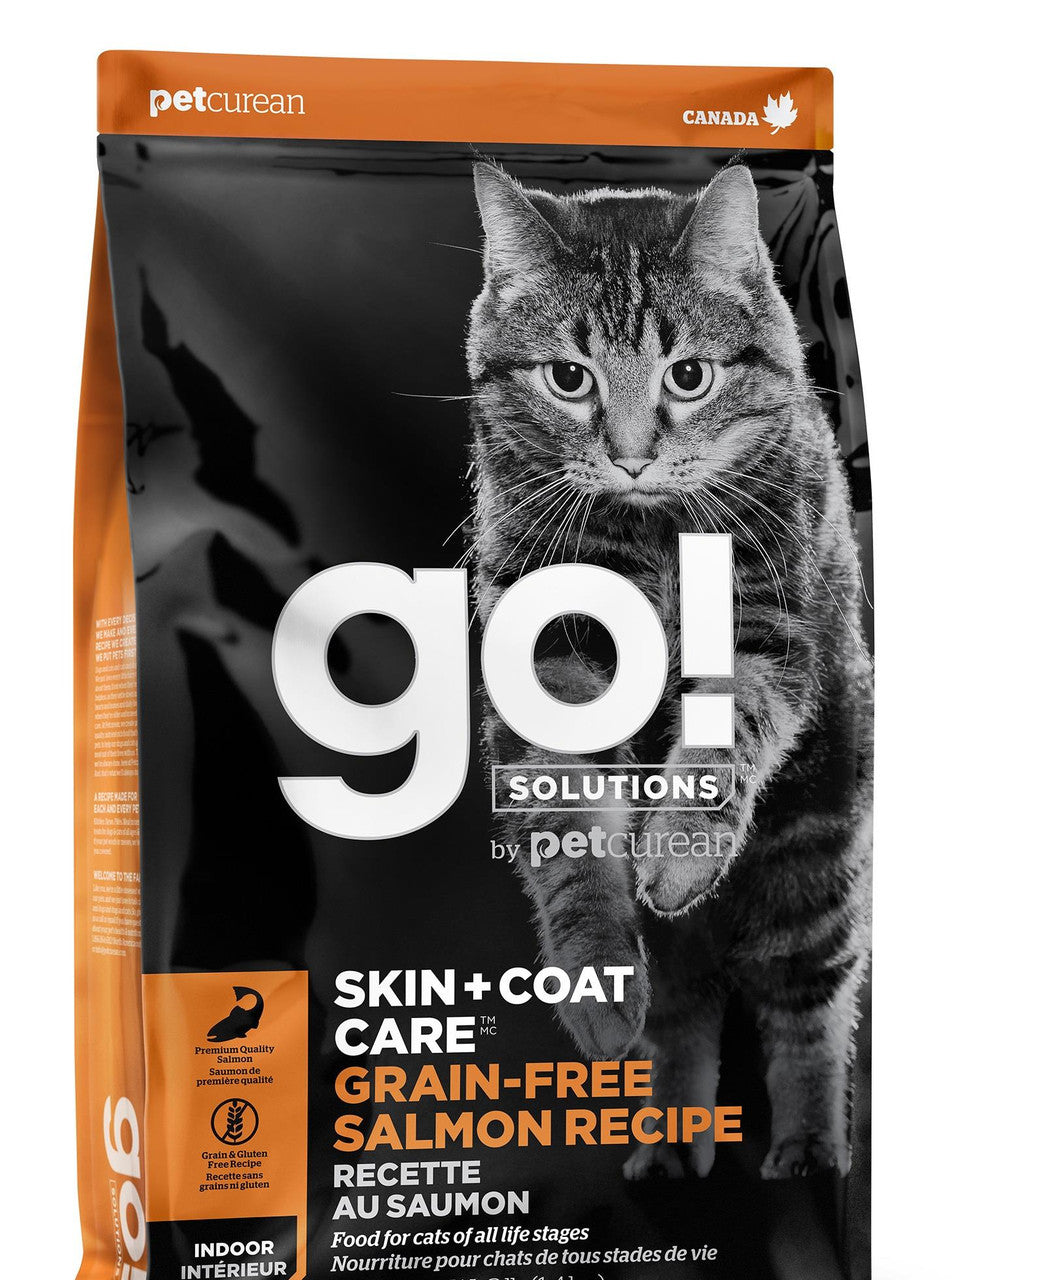 Petcurean Go! Skin & Coat Care Grain Free Salmon Recipe for cats 8lb C=4 {L-1}152230 815260005029